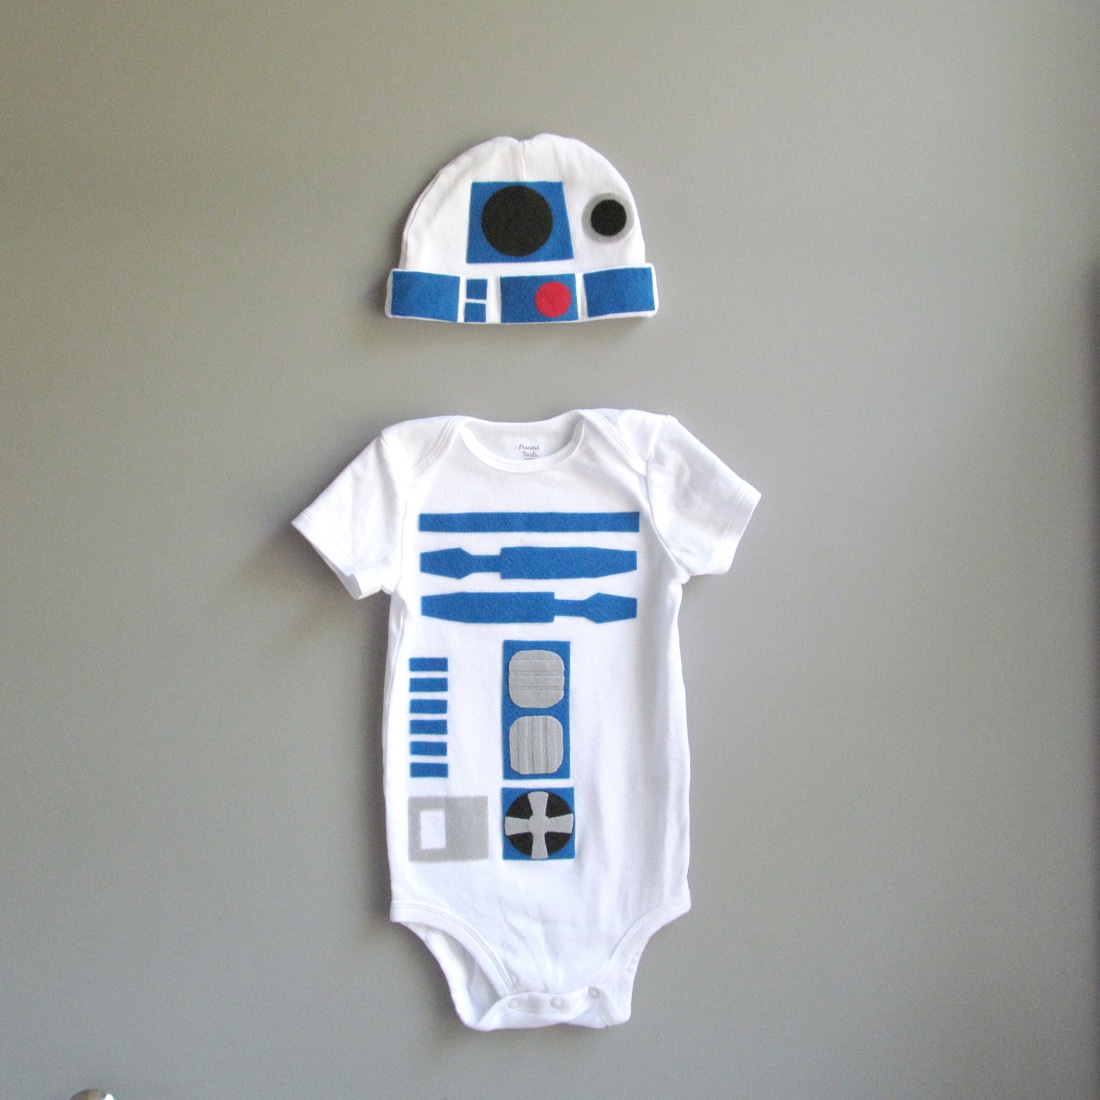 Baby-R2-D2-Costume